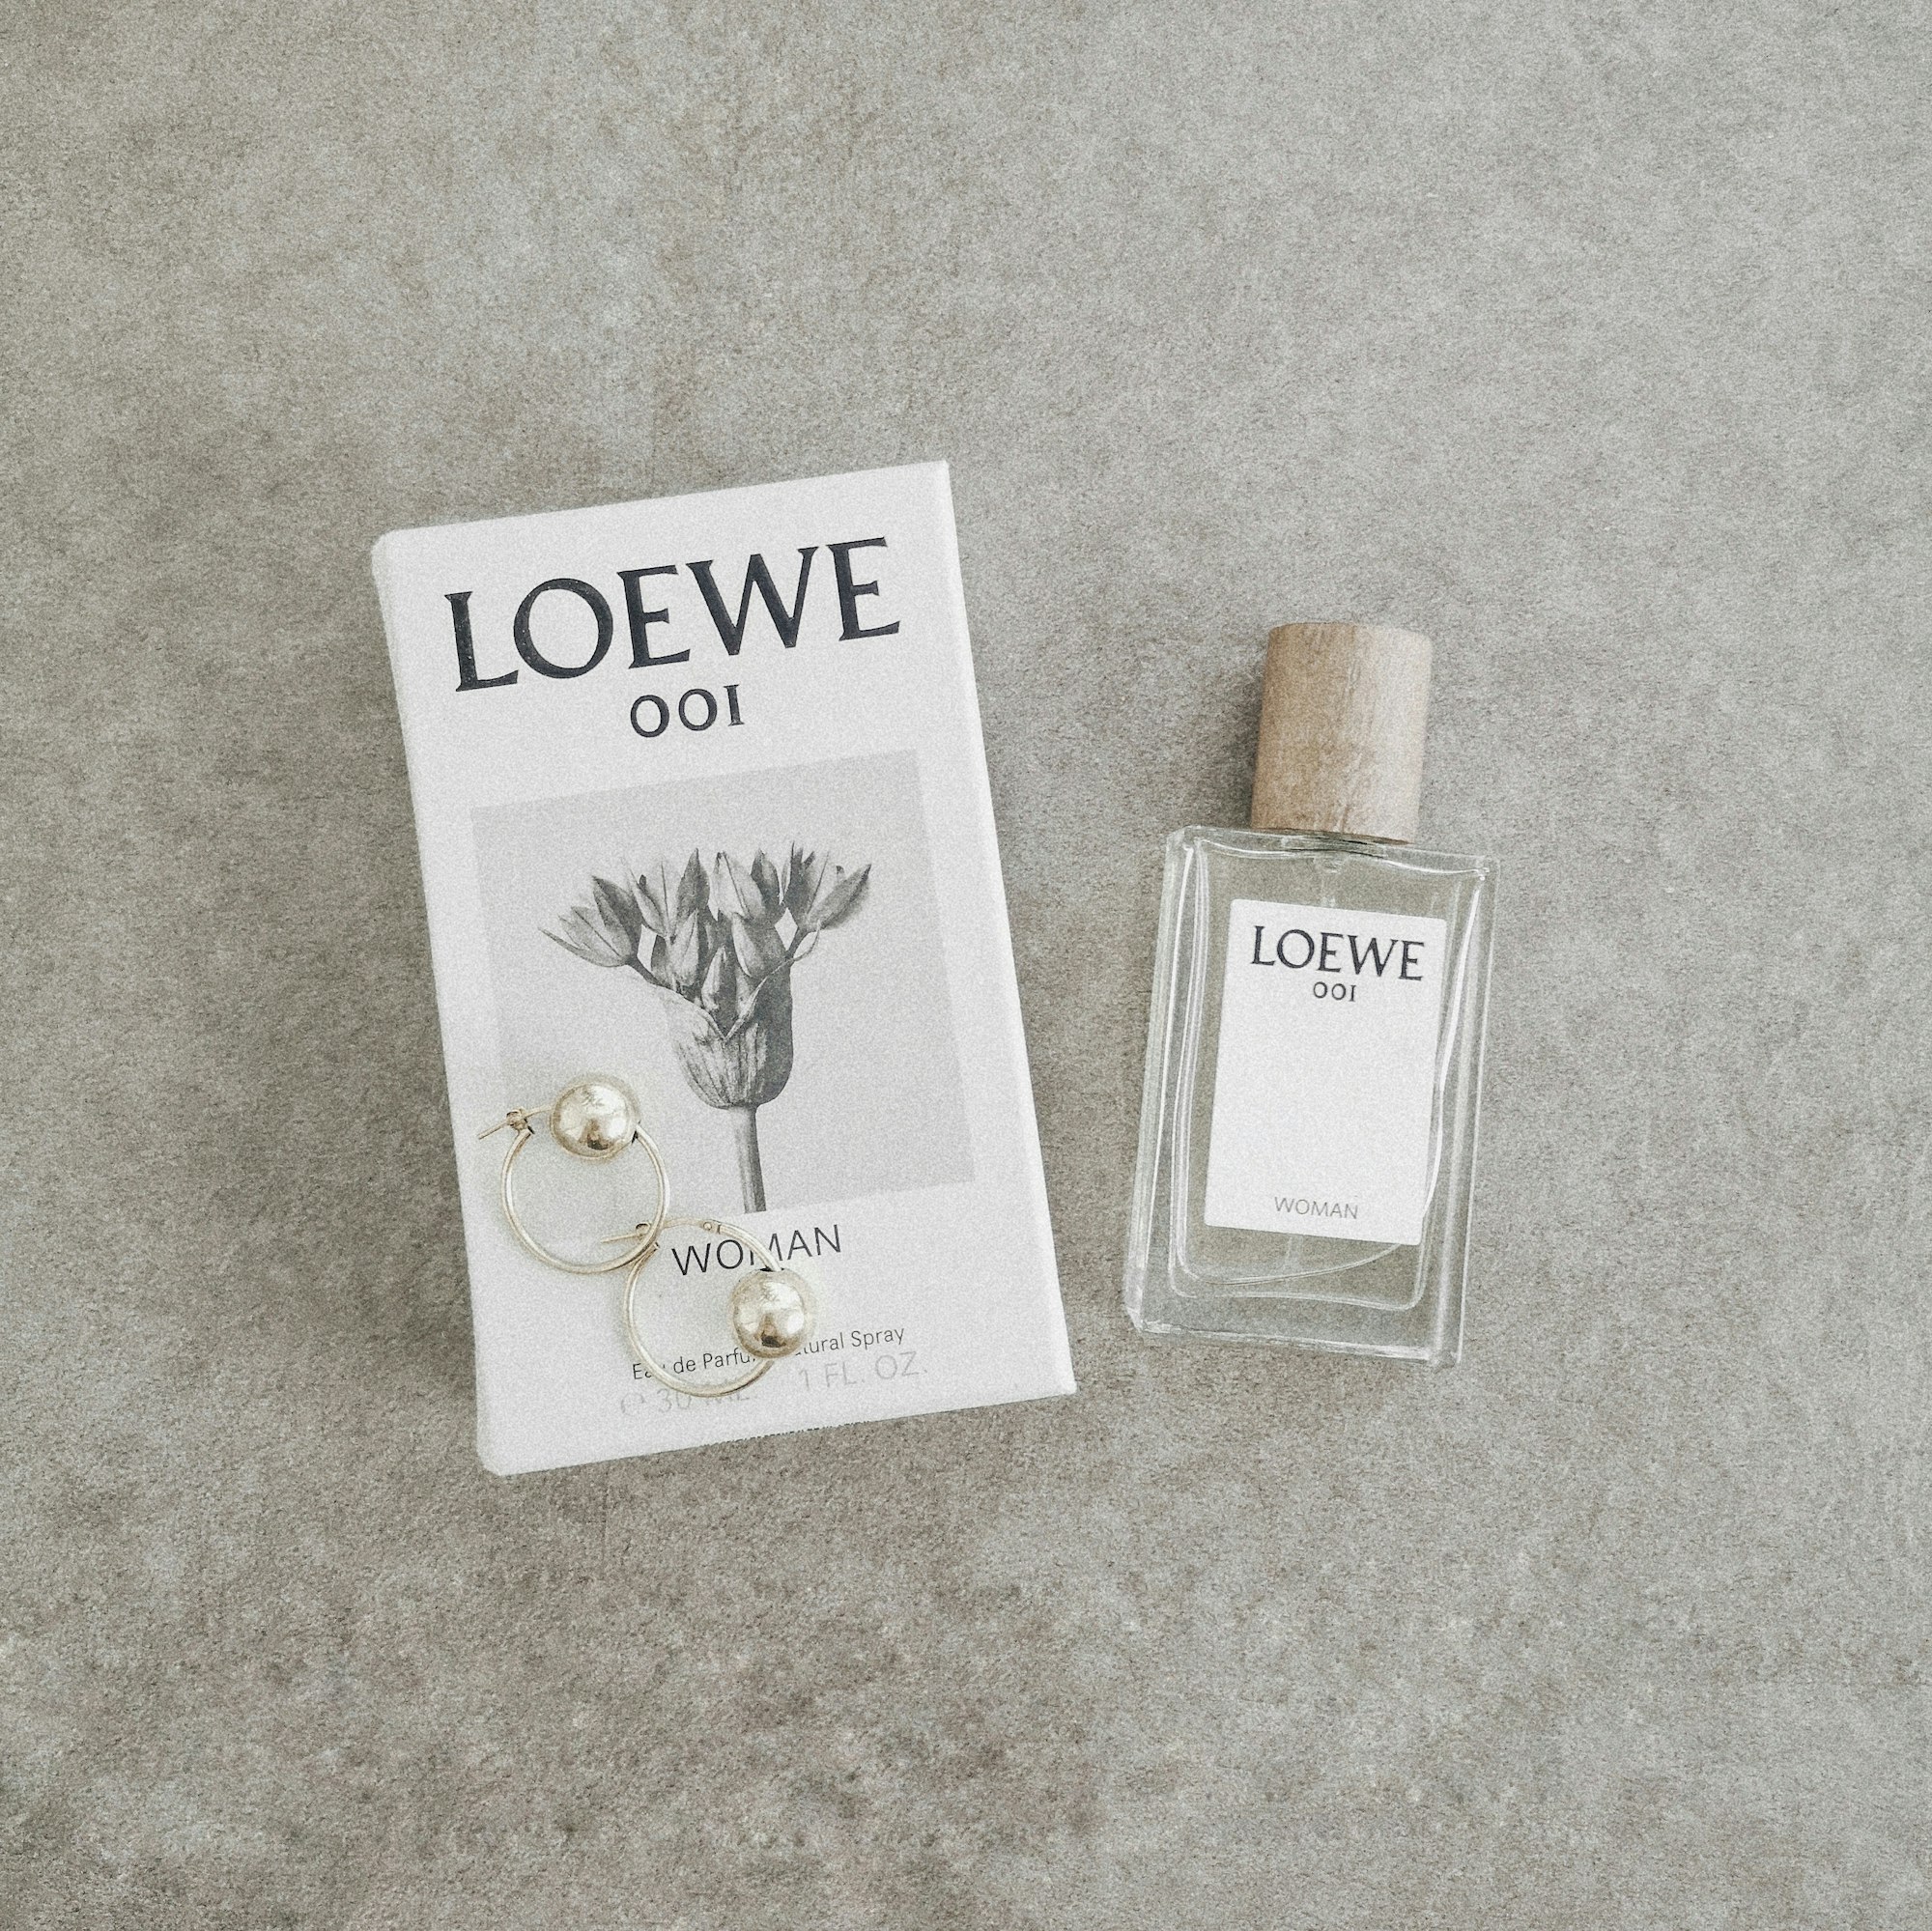 Loewe fragrance with gold earrings.